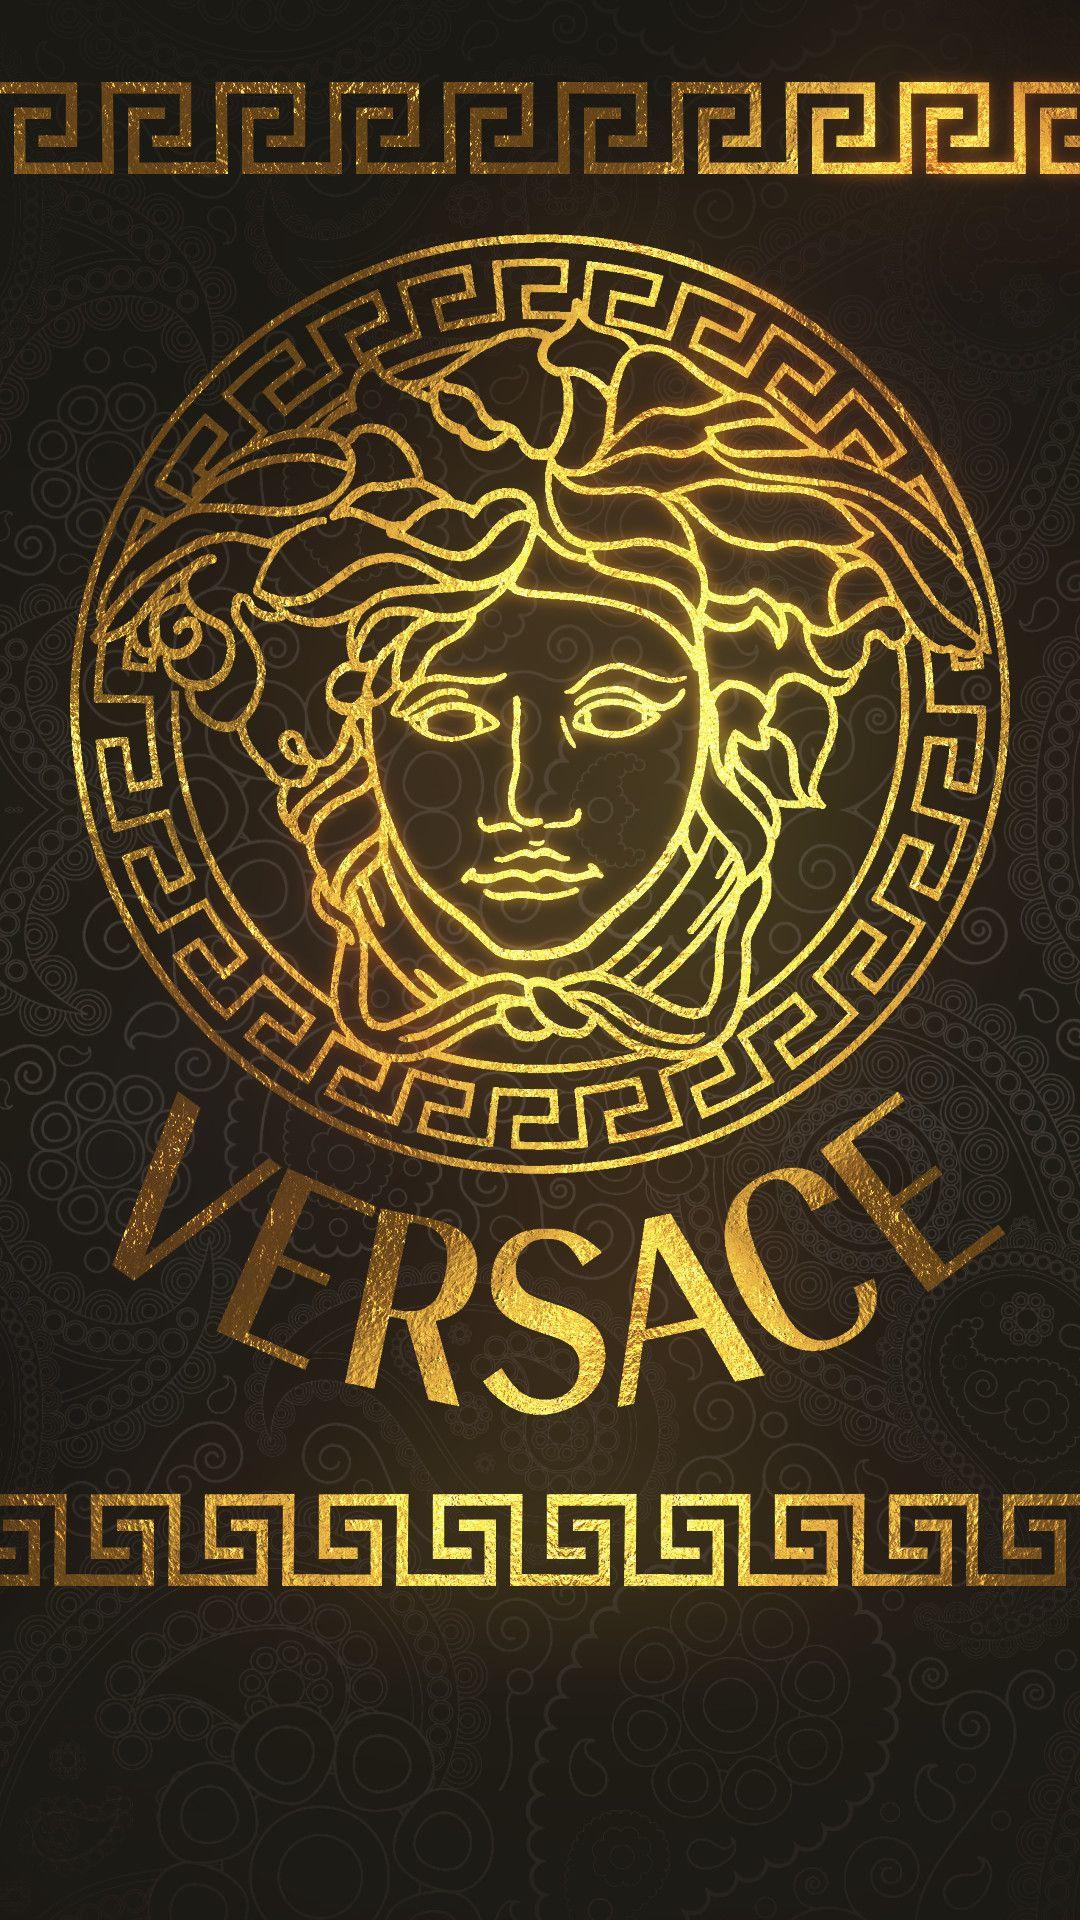 Versace Logo Wallpapers - Top Free Versace Logo Backgrounds ...